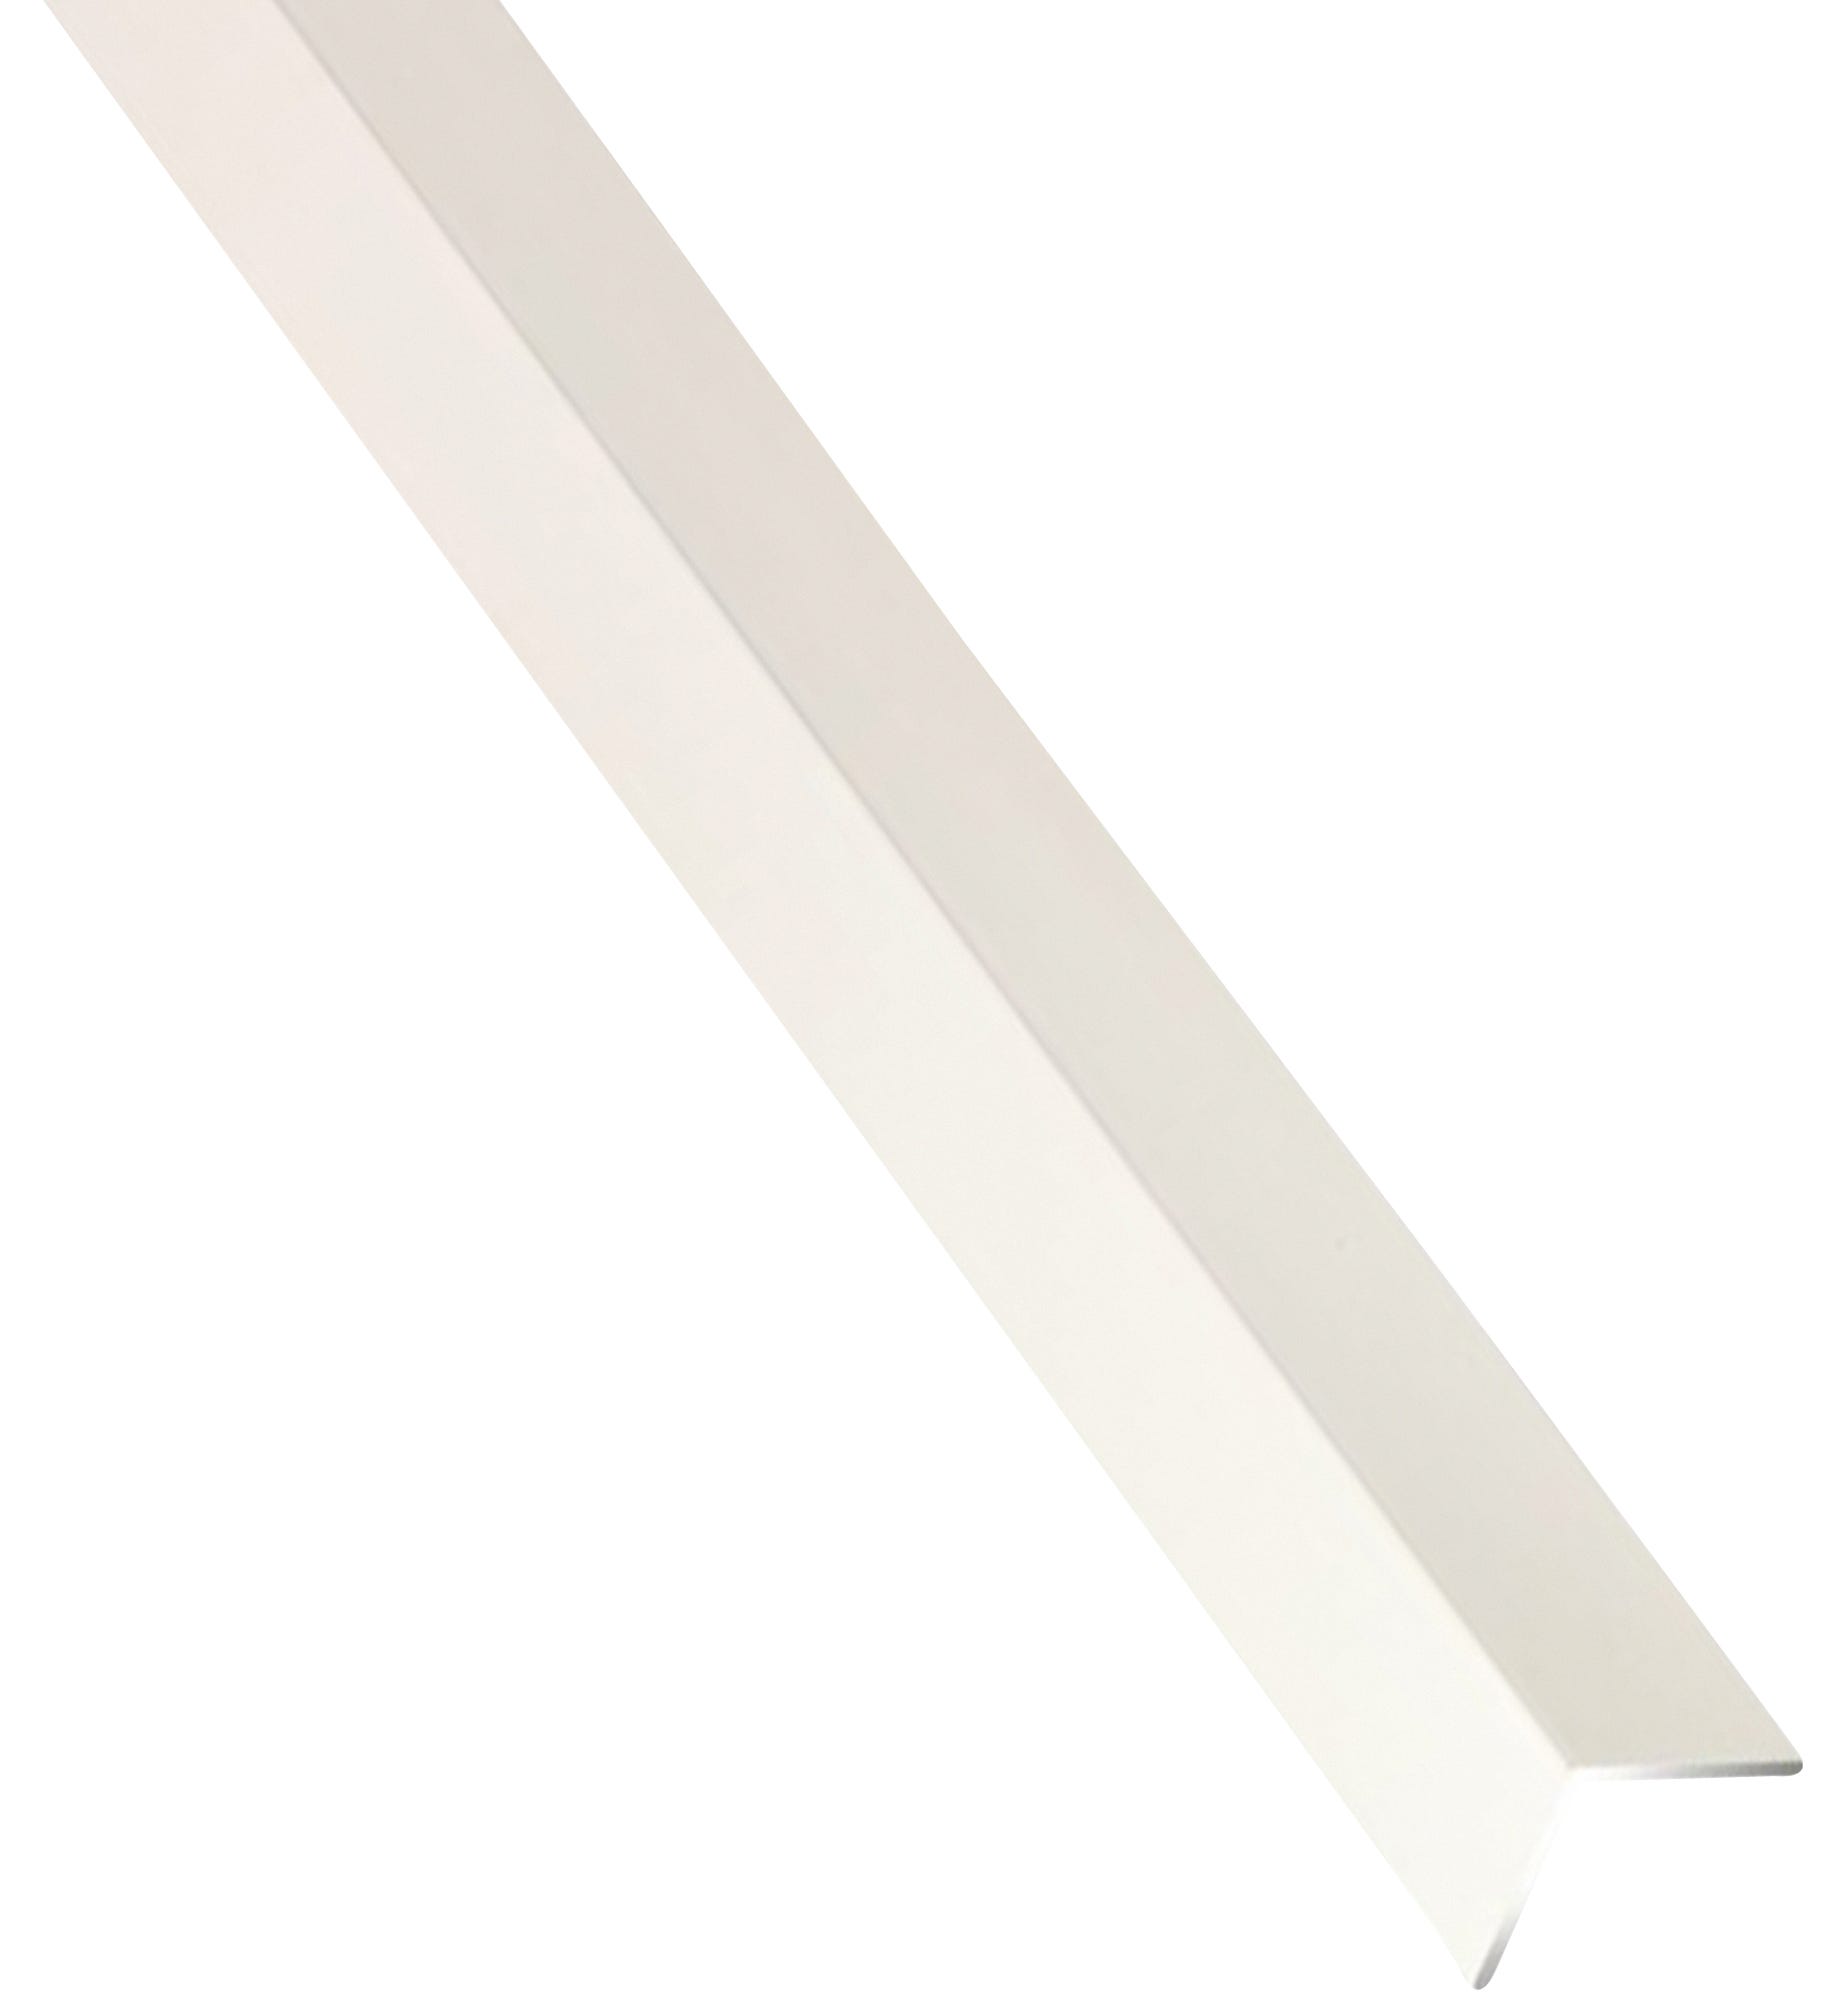 Perfil forma ángulo de aluminio blanco, Alt.1.6 x An.1.6 x L.100 cm